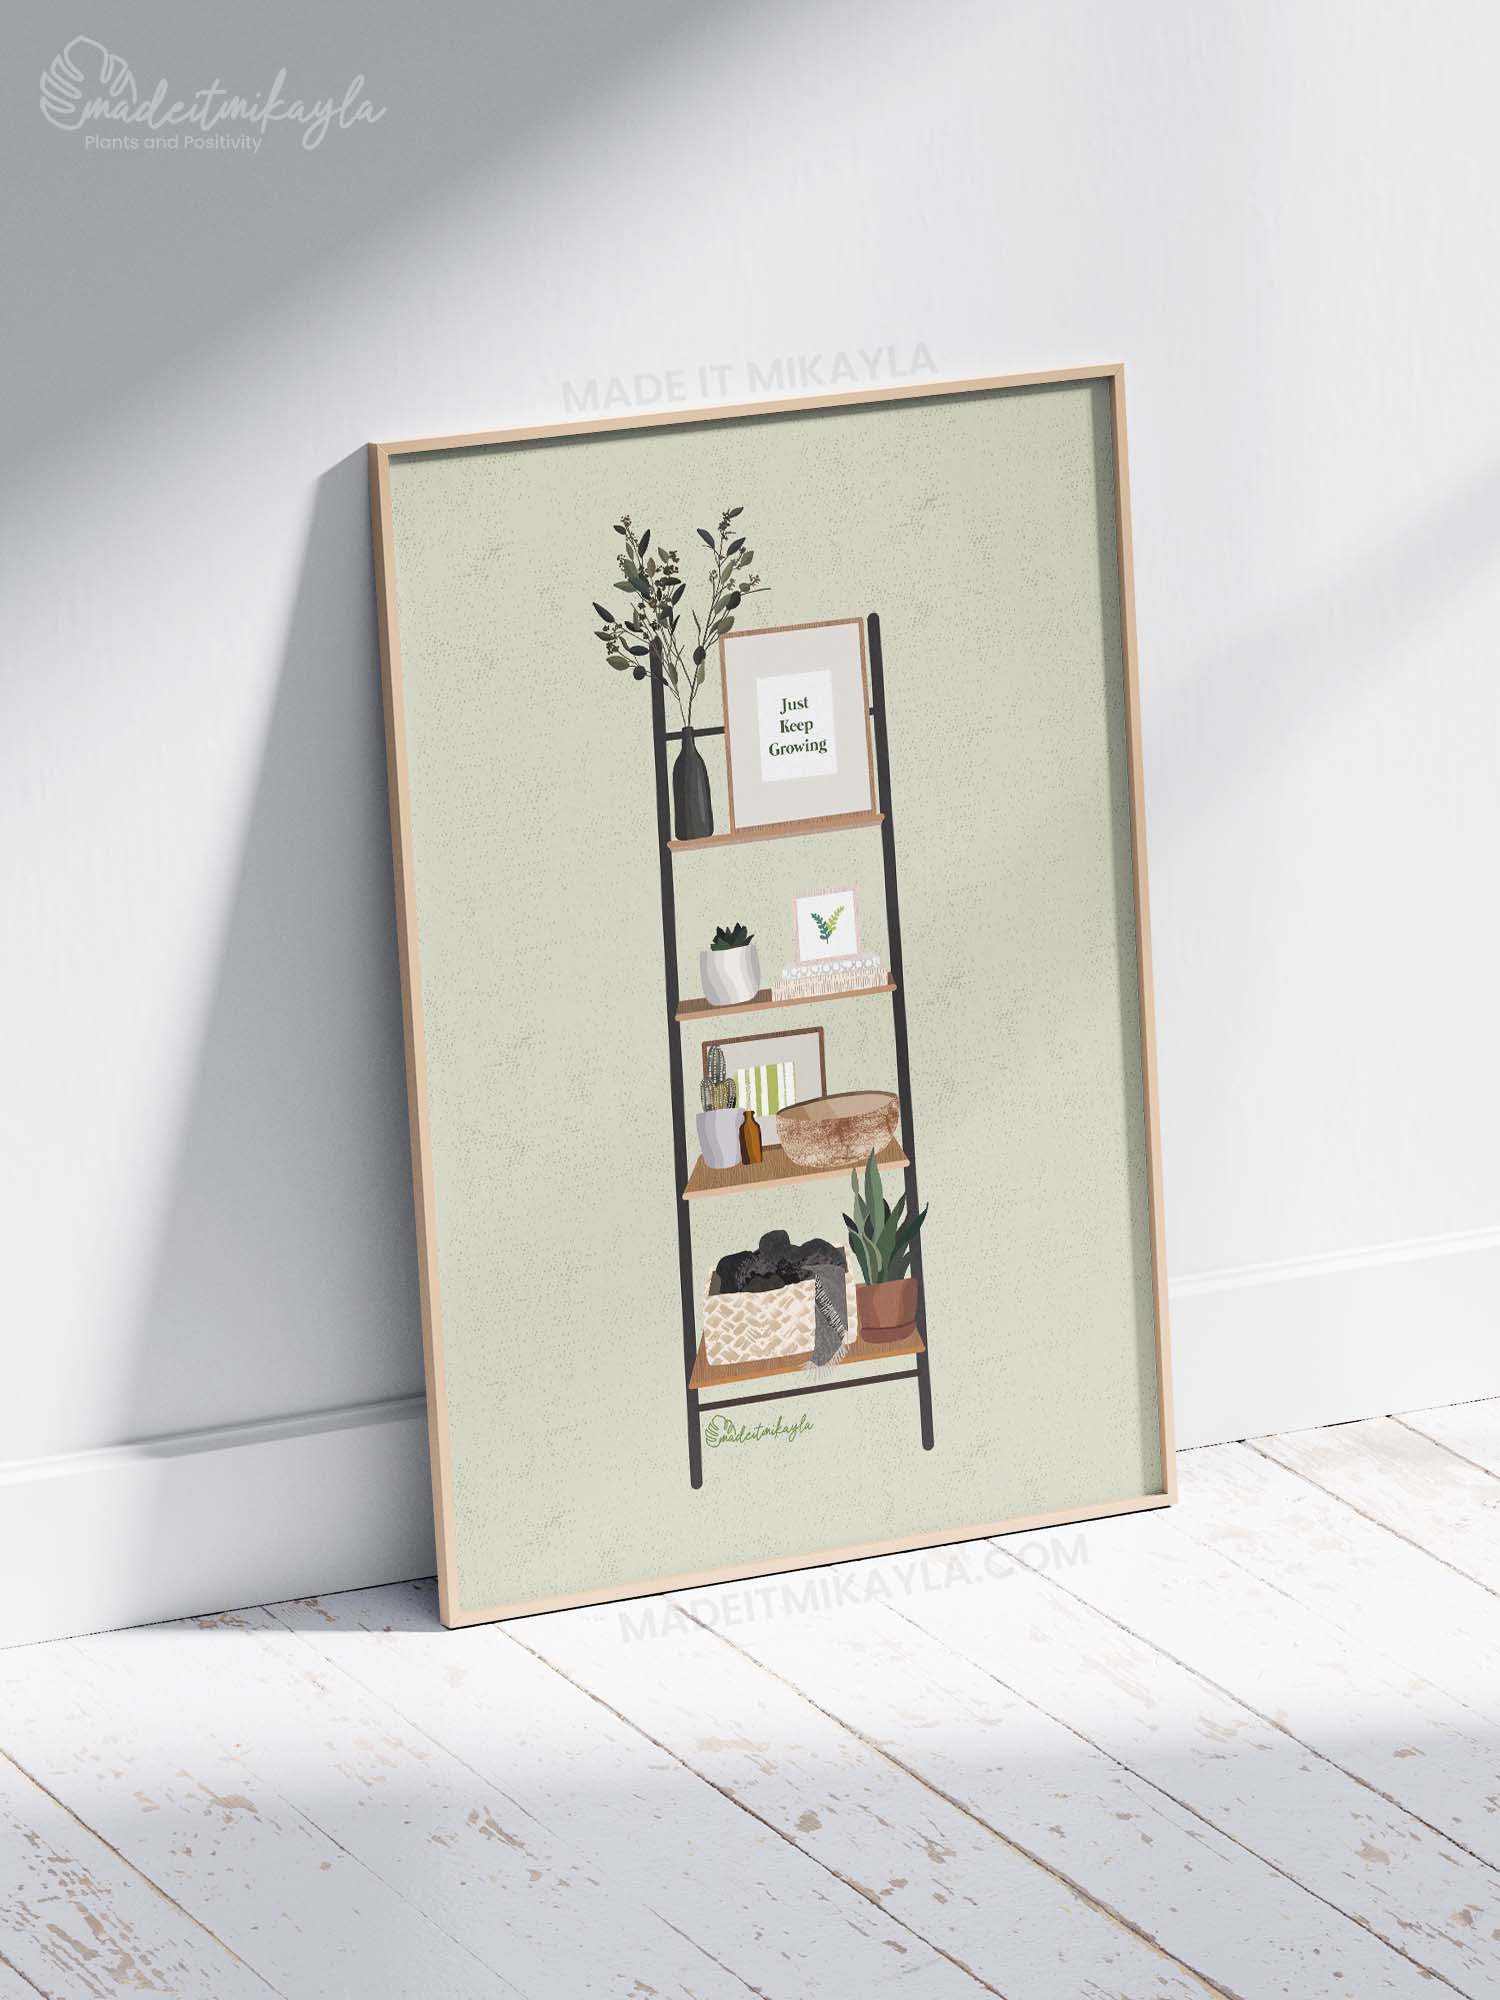 Just Keep Growing Plant Shelves Art Print | MadeItMikayla